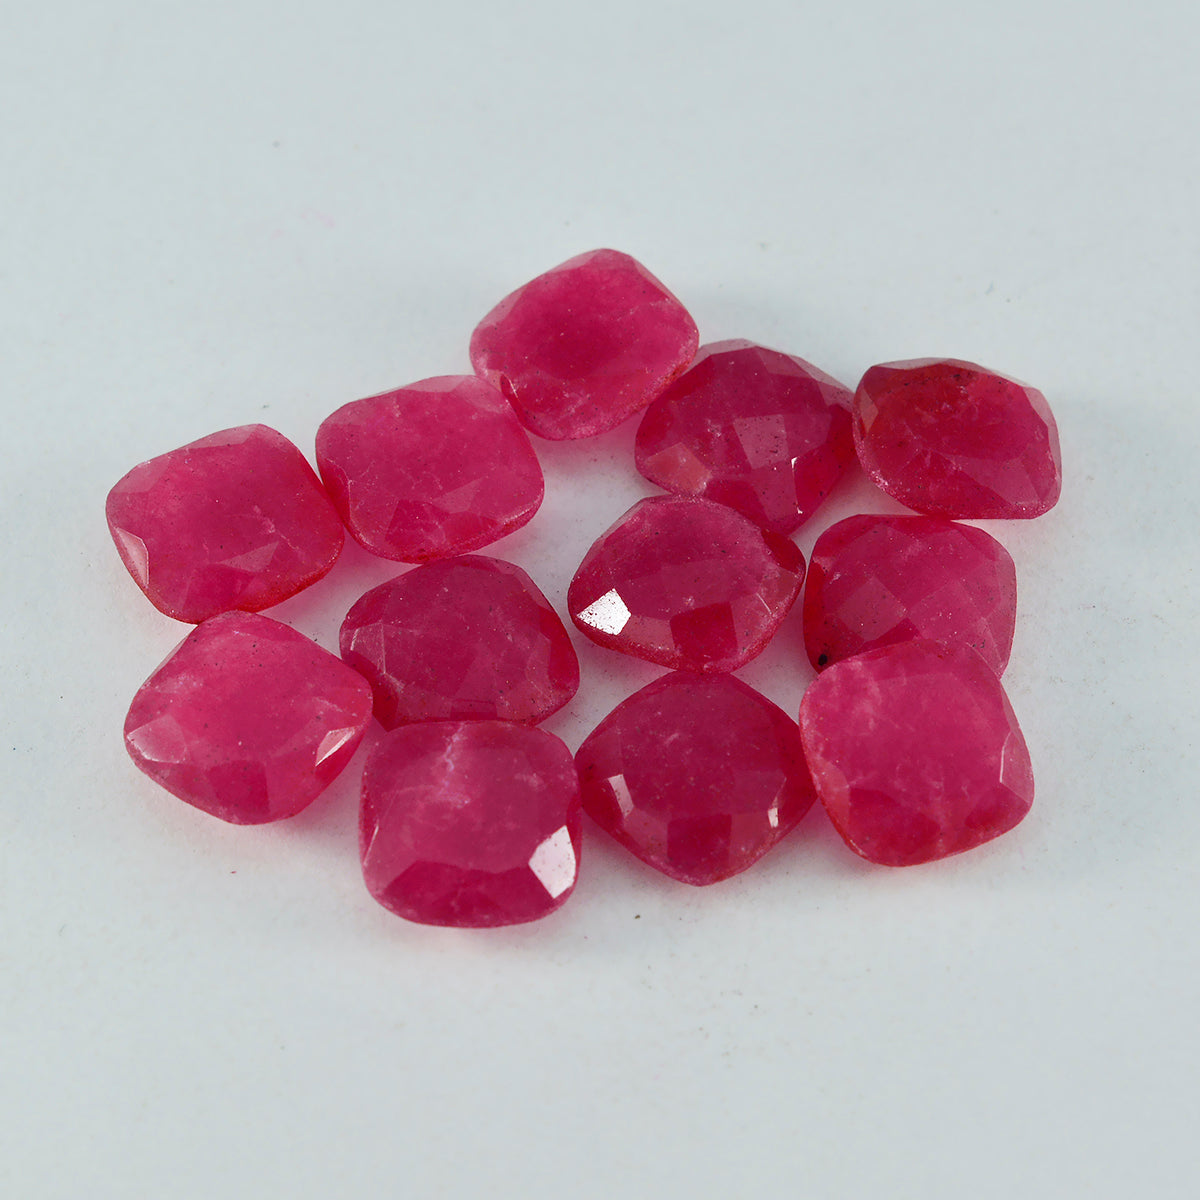 riyogems 1 st naturlig röd jaspis facetterad 5x5 mm kudde form häpnadsväckande kvalitet lös pärla